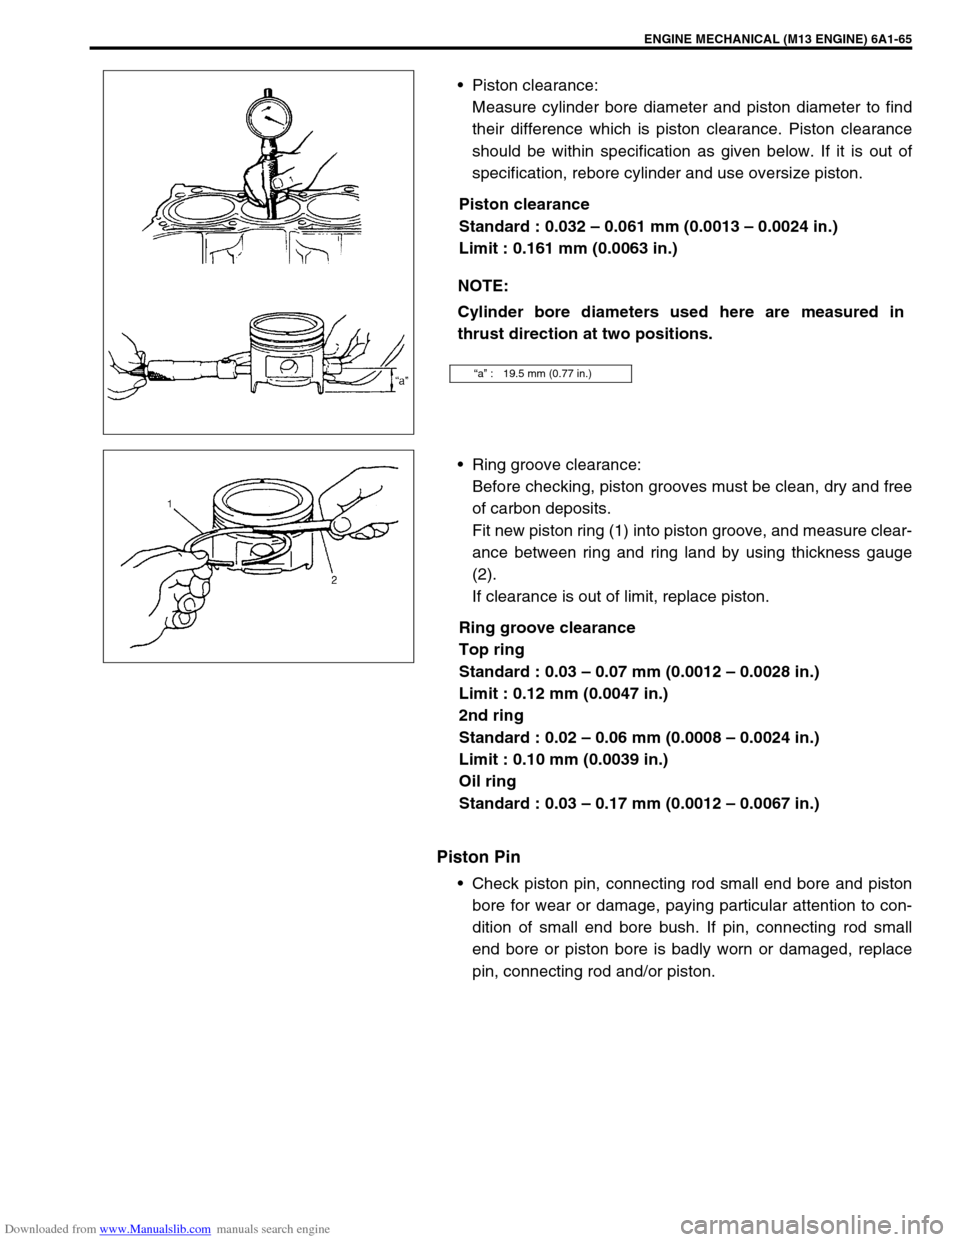 SUZUKI JIMNY 2005 3.G Service Workshop Manual Downloaded from www.Manualslib.com manuals search engine ENGINE MECHANICAL (M13 ENGINE) 6A1-65
Piston clearance:
Measure cylinder bore diameter and piston diameter to find
their difference which is p